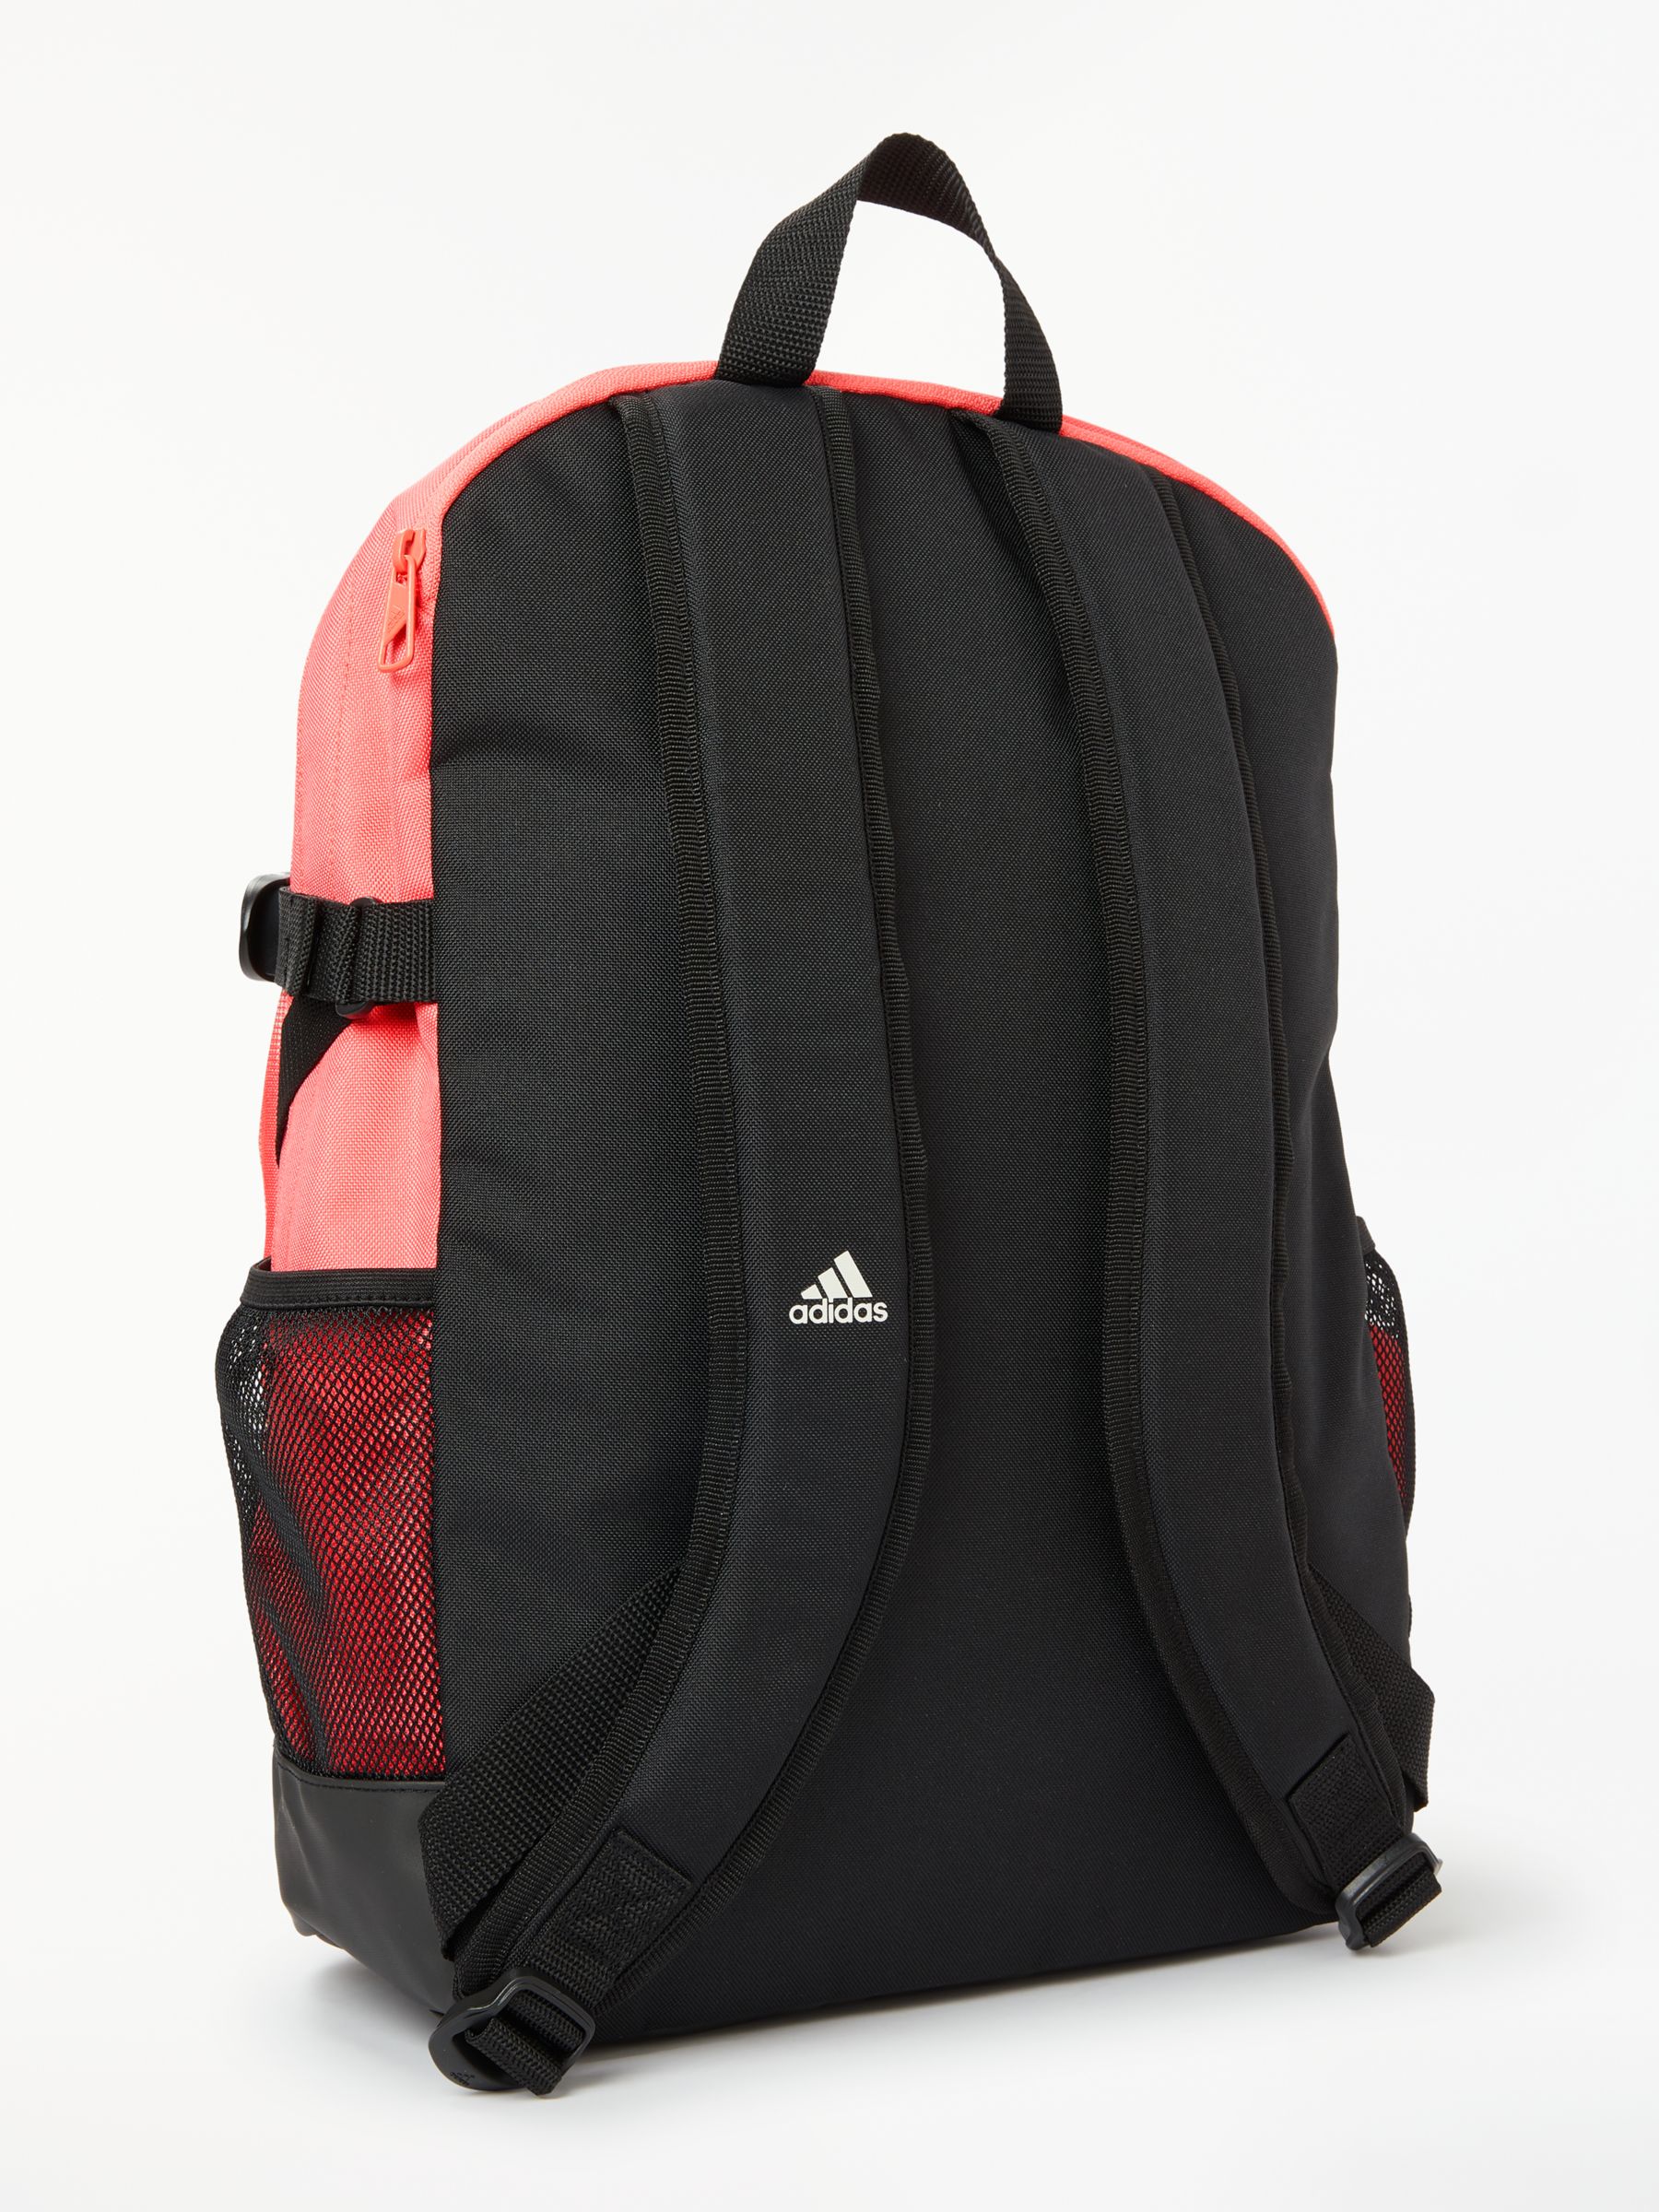 adidas prism backpack